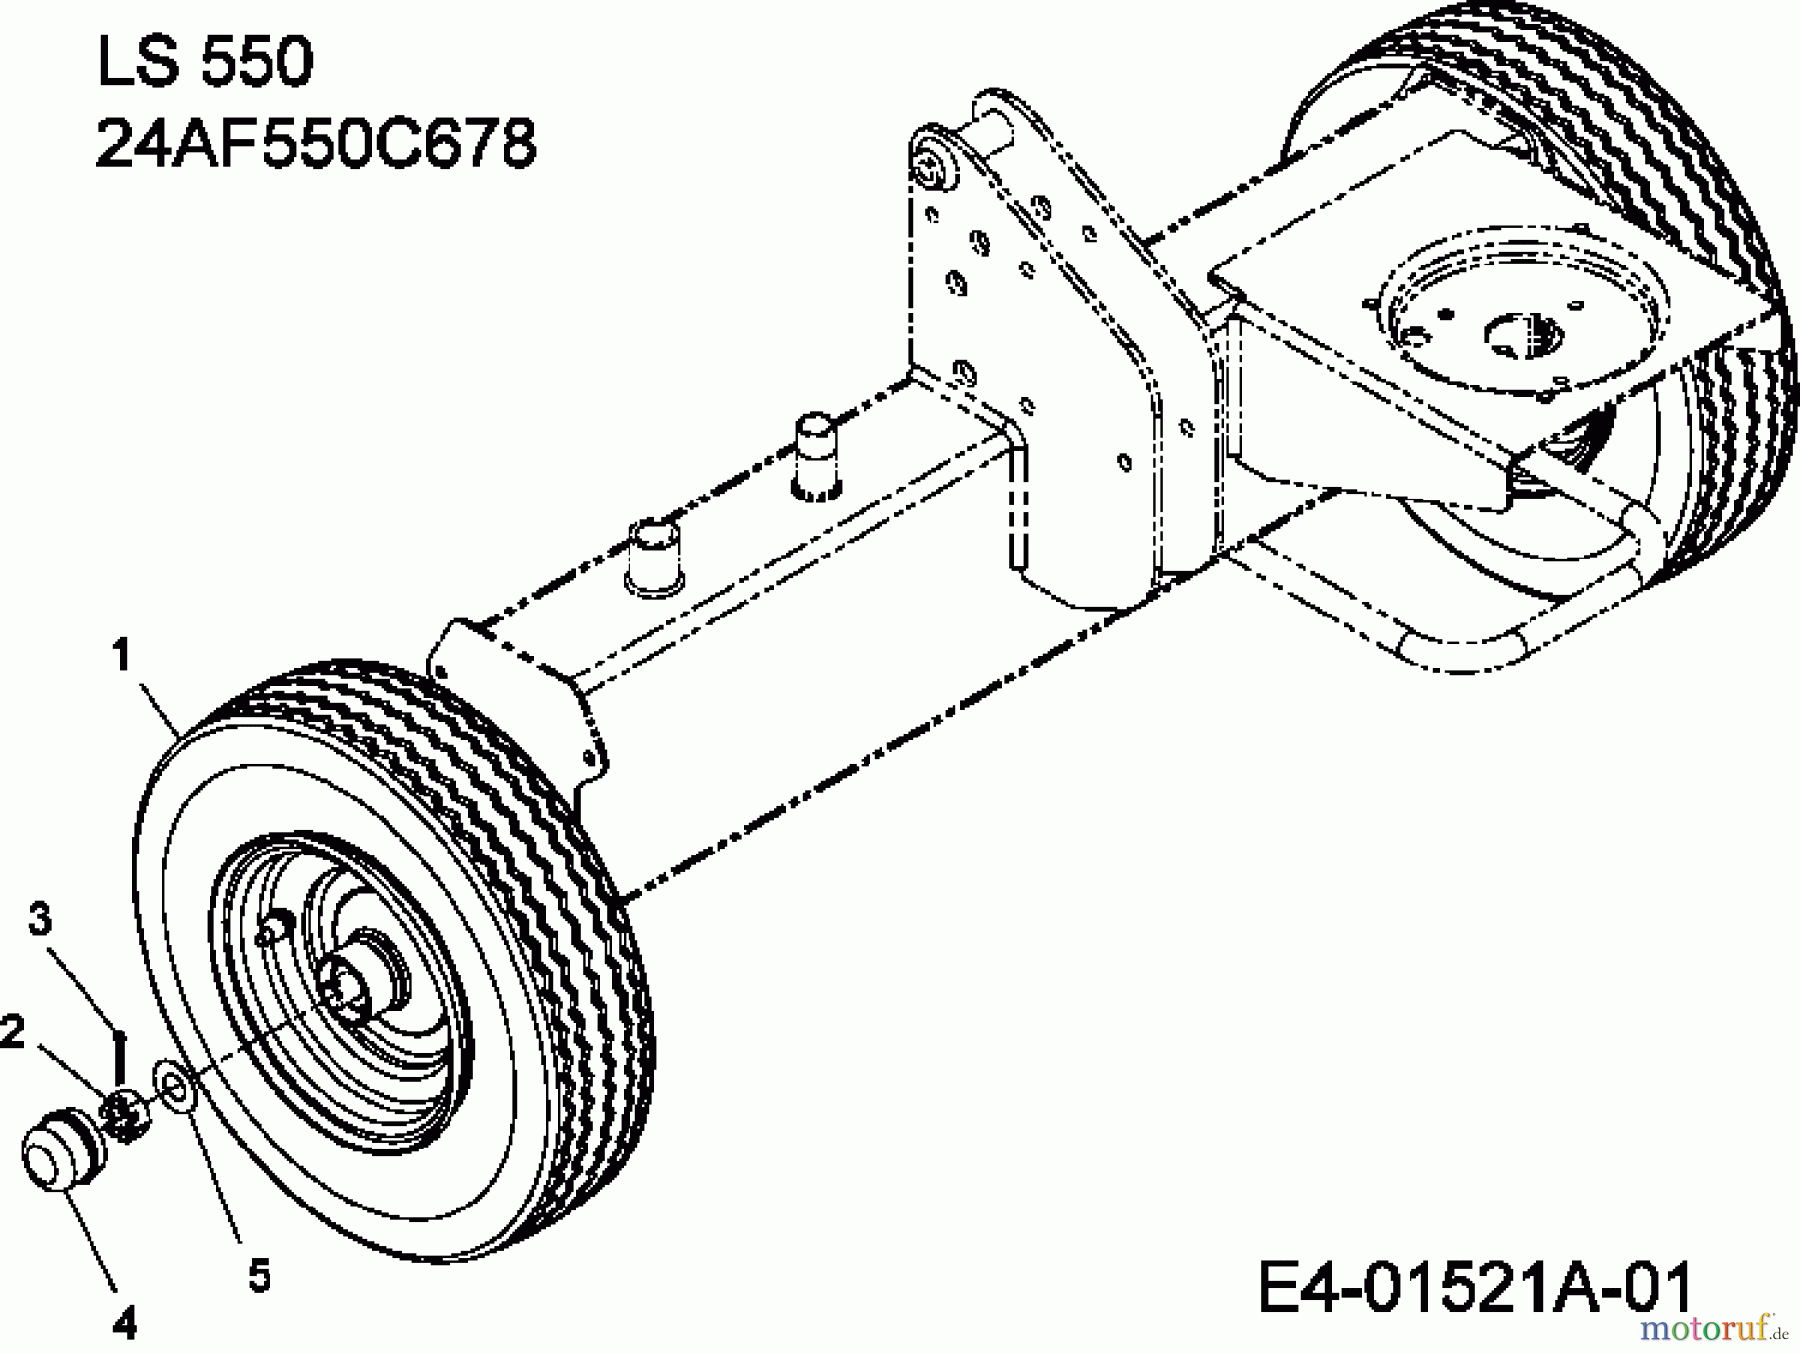  MTD Log splitter LS 550 24AI550C678  (2015) Wheels